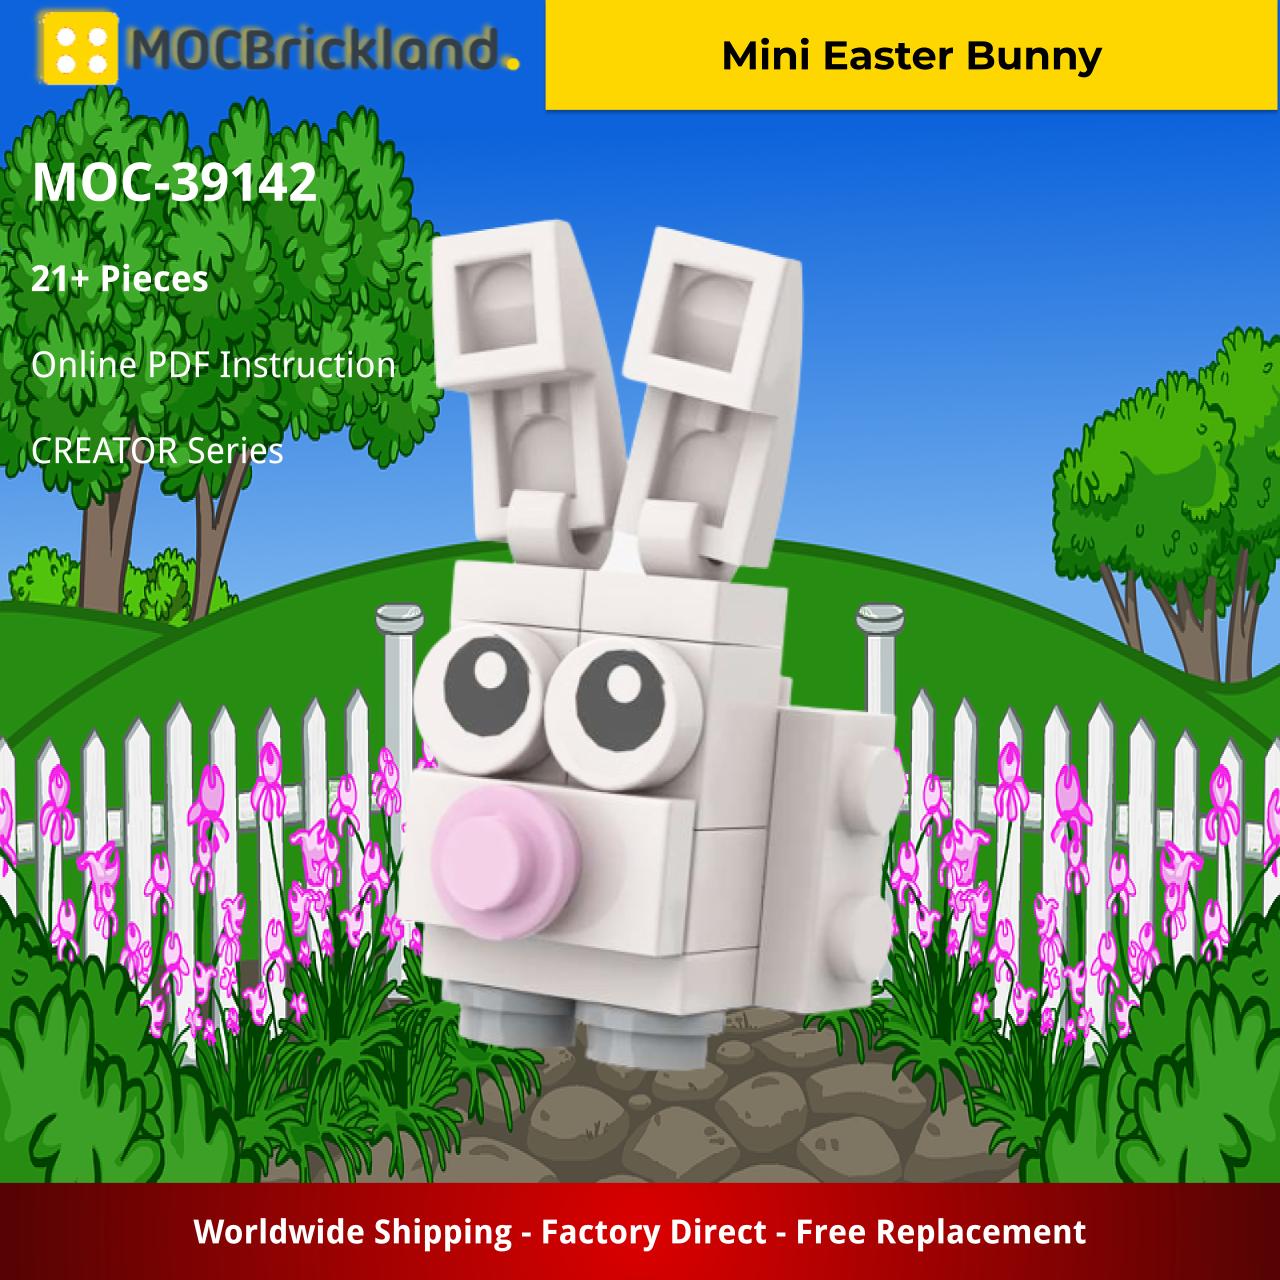 MOCBRICKLAND MOC-39142 Mini Easter Bunny